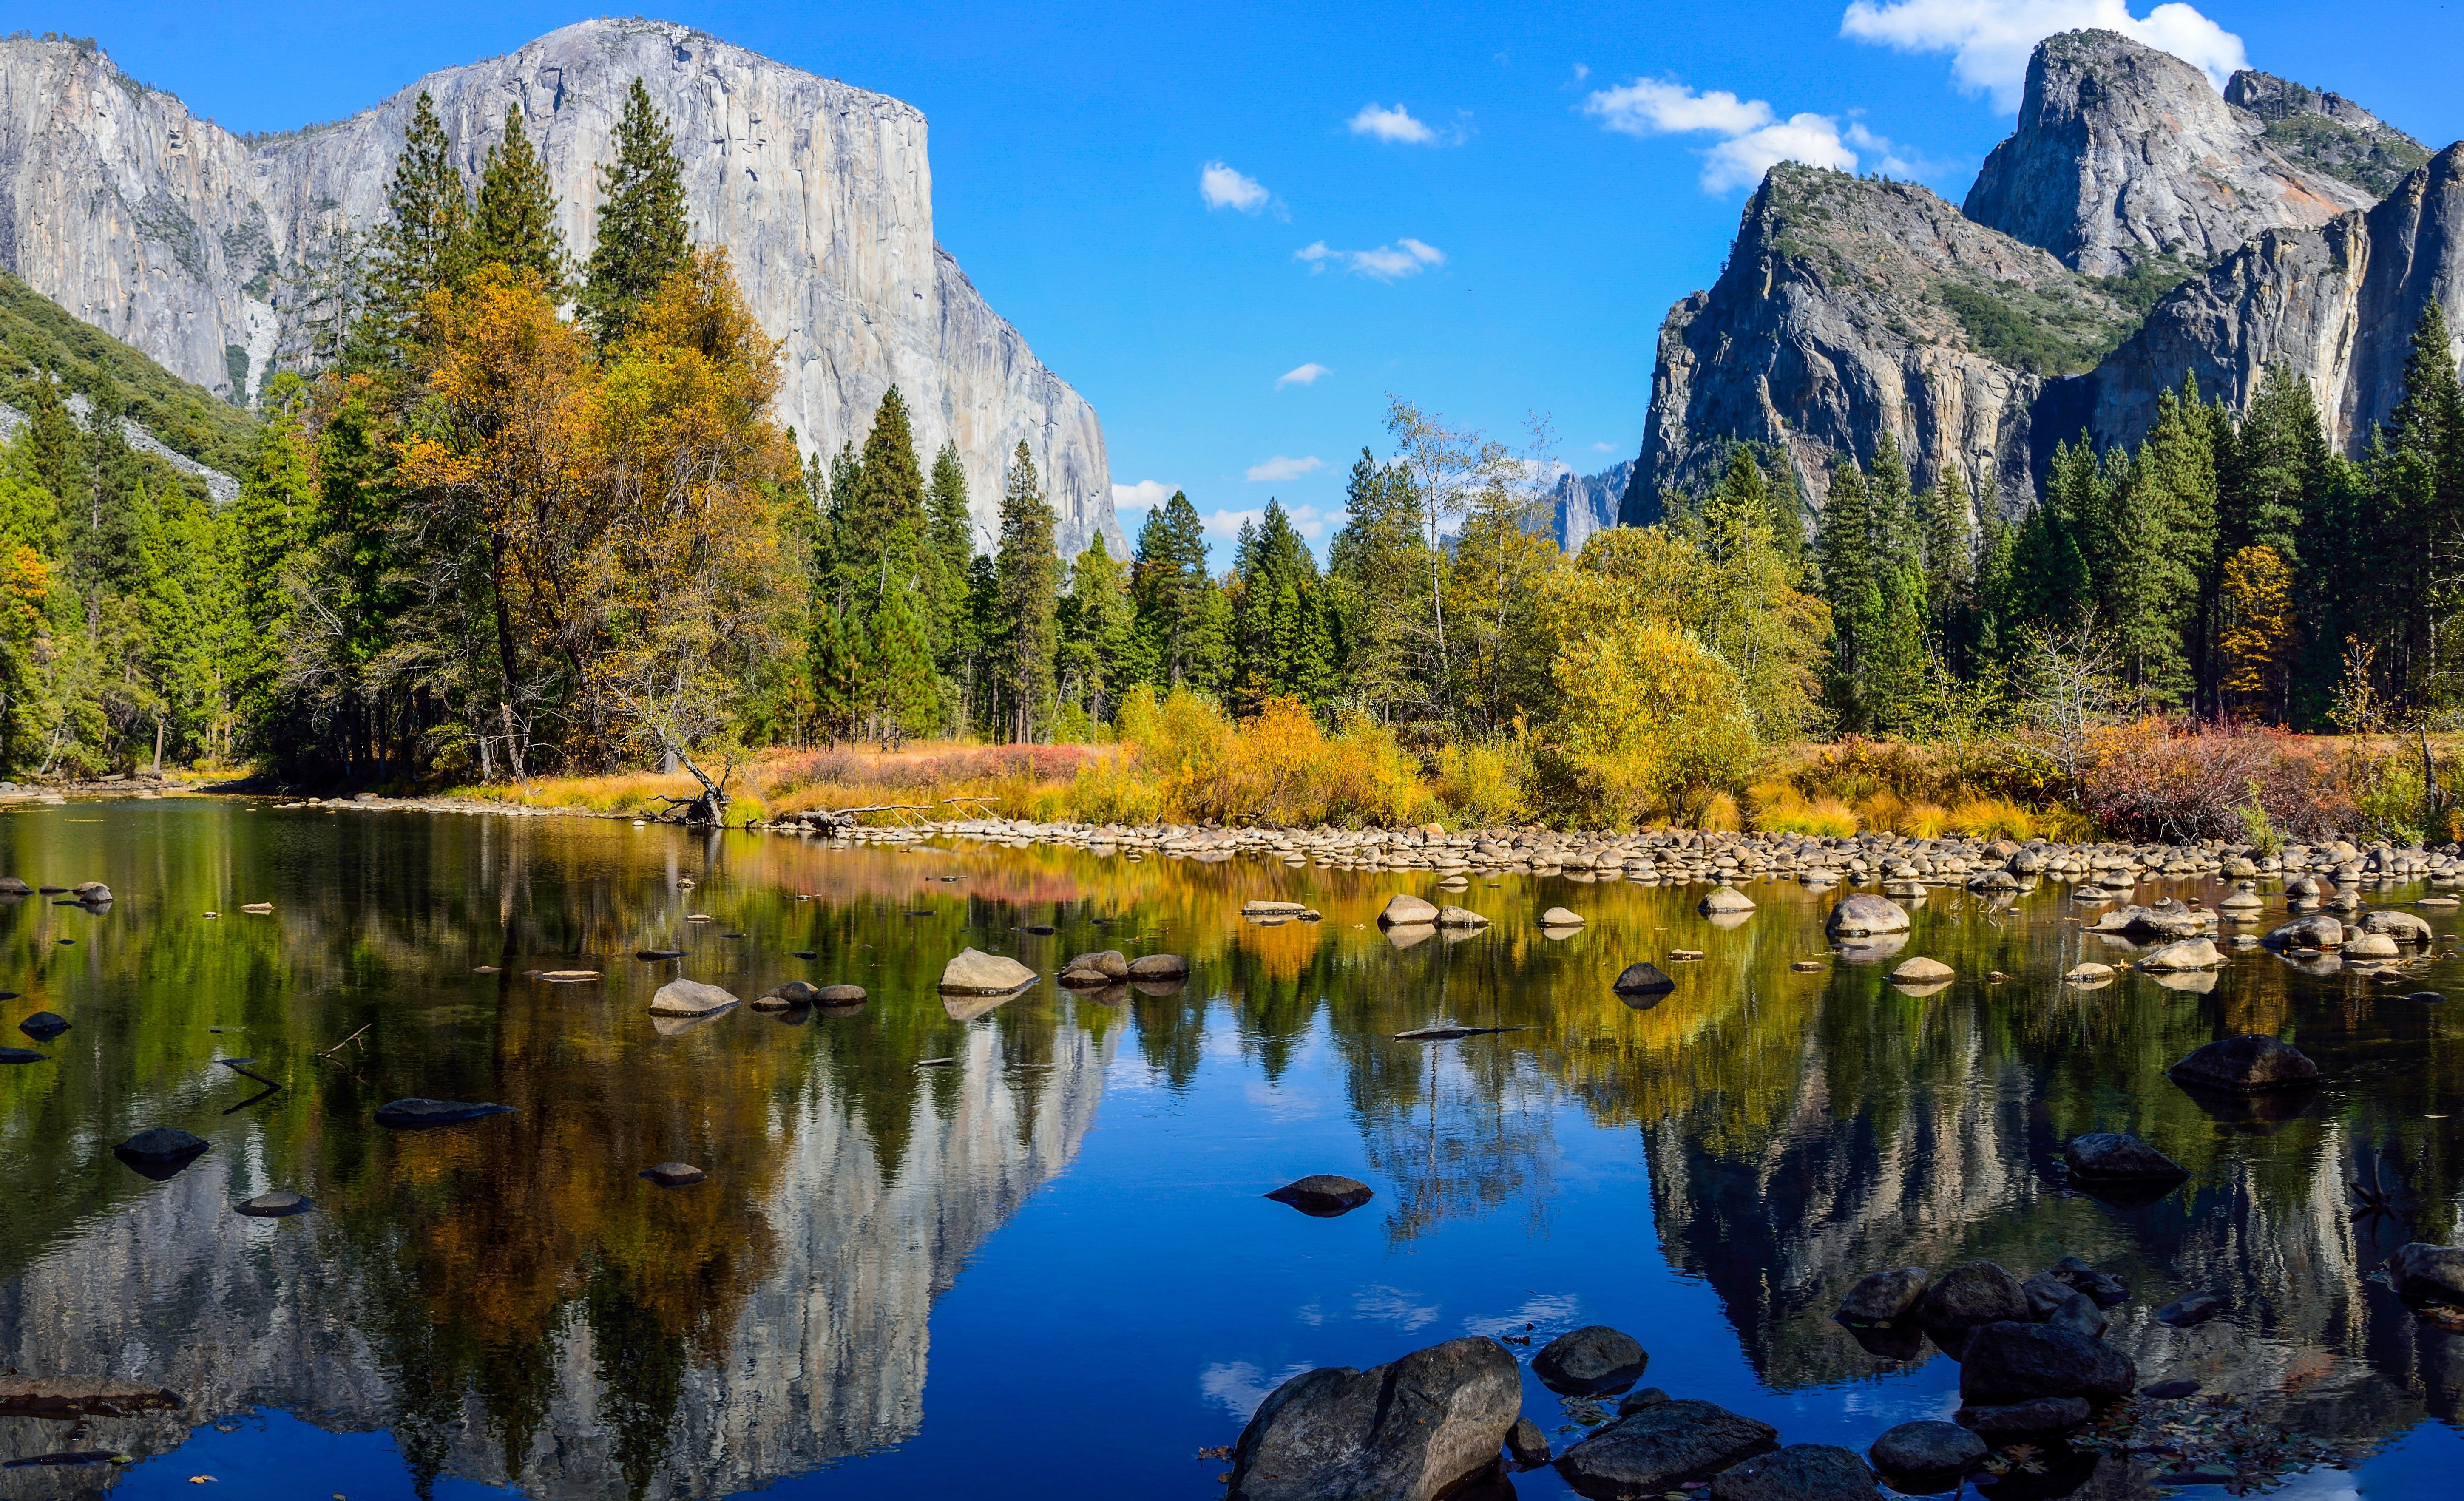 Yosemite National Park Scenery 100019 - Pacify Mind